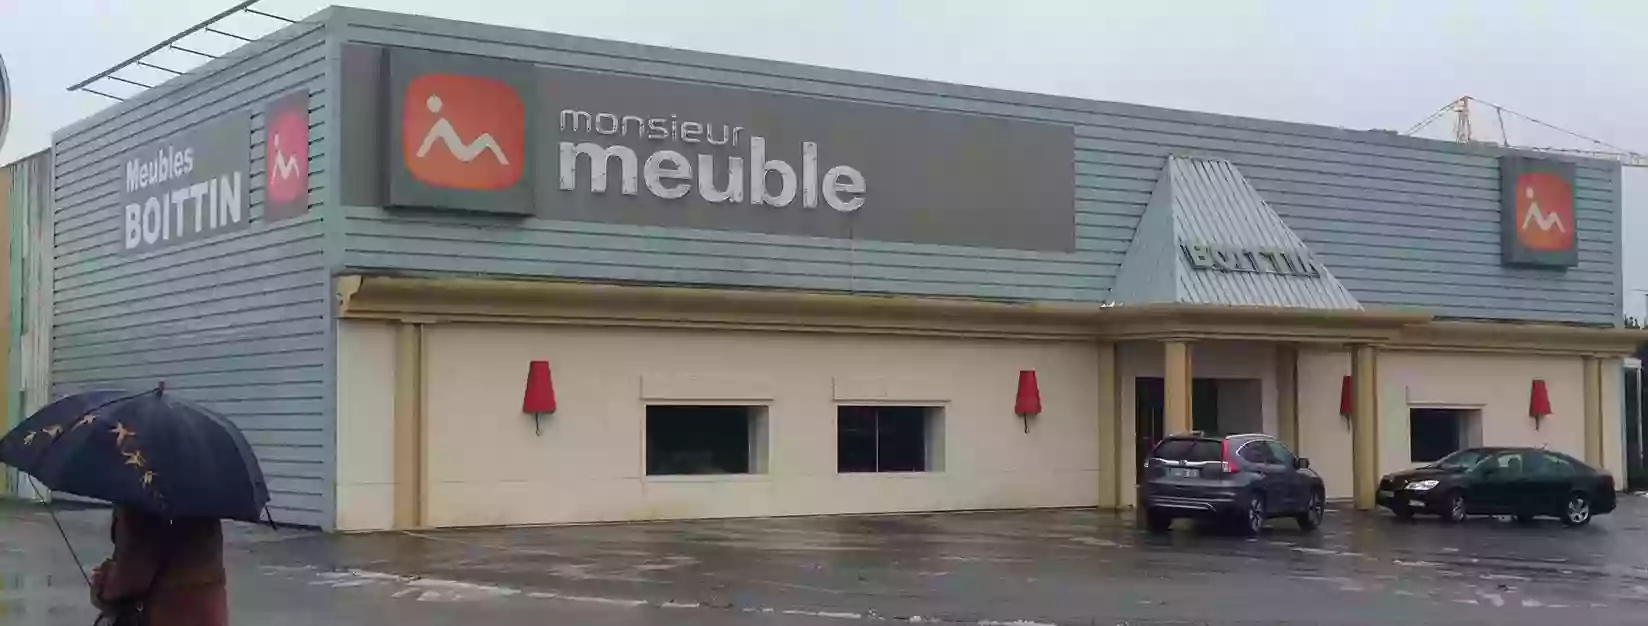 Monsieur Meuble Laval - Saint Berthevin